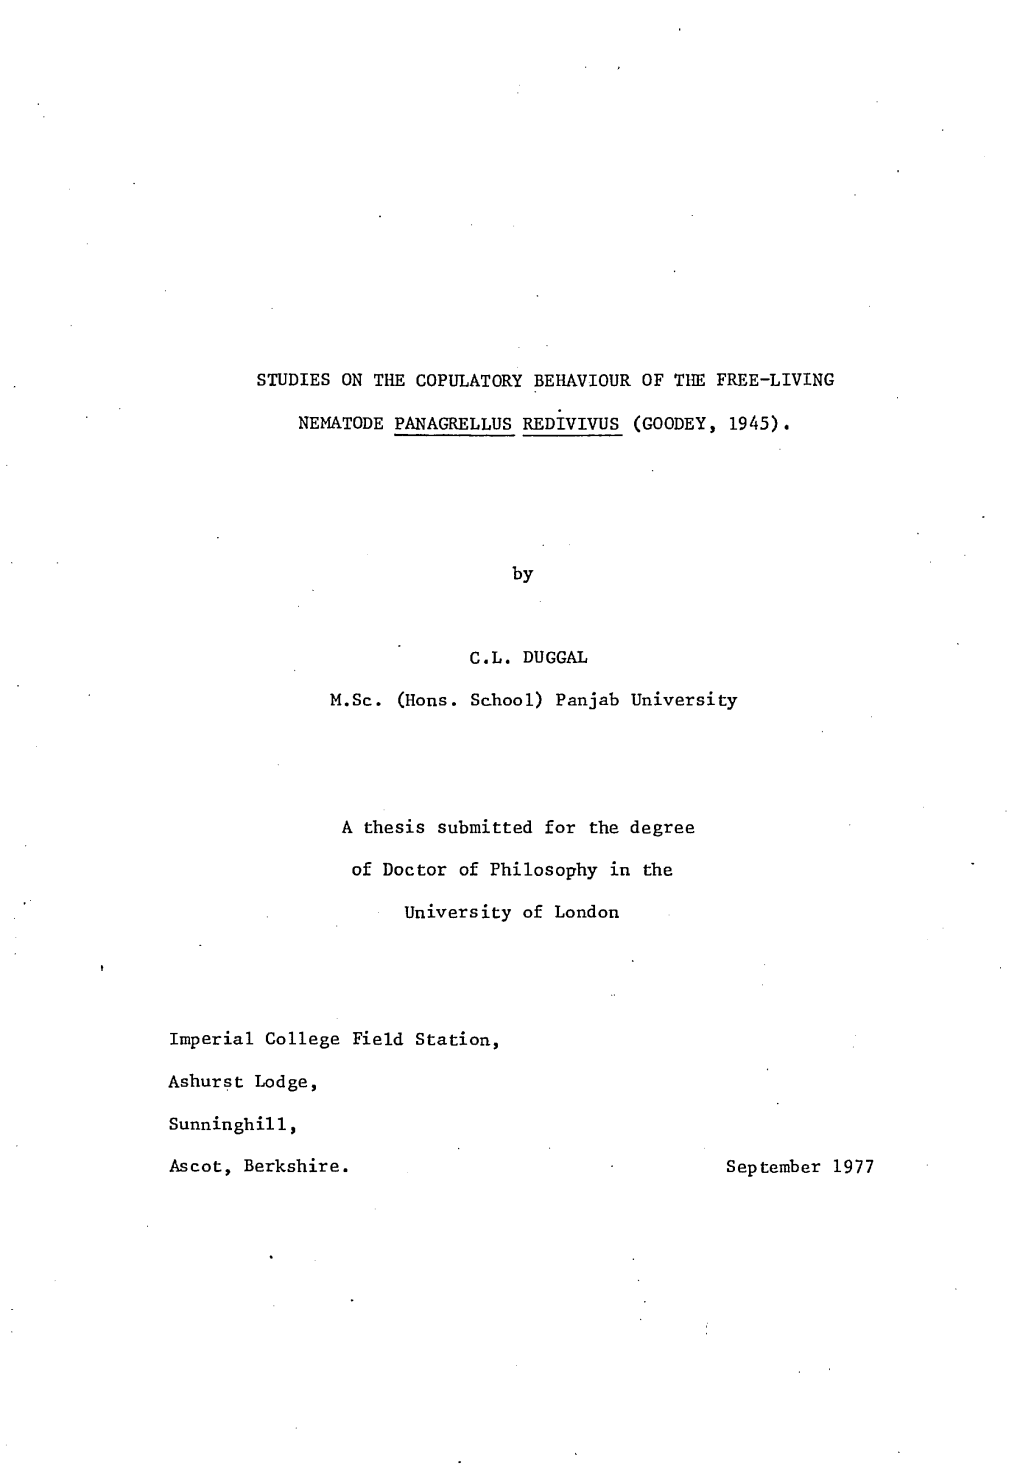 STUDIES on the COPULATORY BEHAVIOUR of the FREE-LIVING NEMATODE PANAGRELLUS REDIVIVUS (GOODEY, 1945). by C.L. DUGGAL M.Sc. (Hons